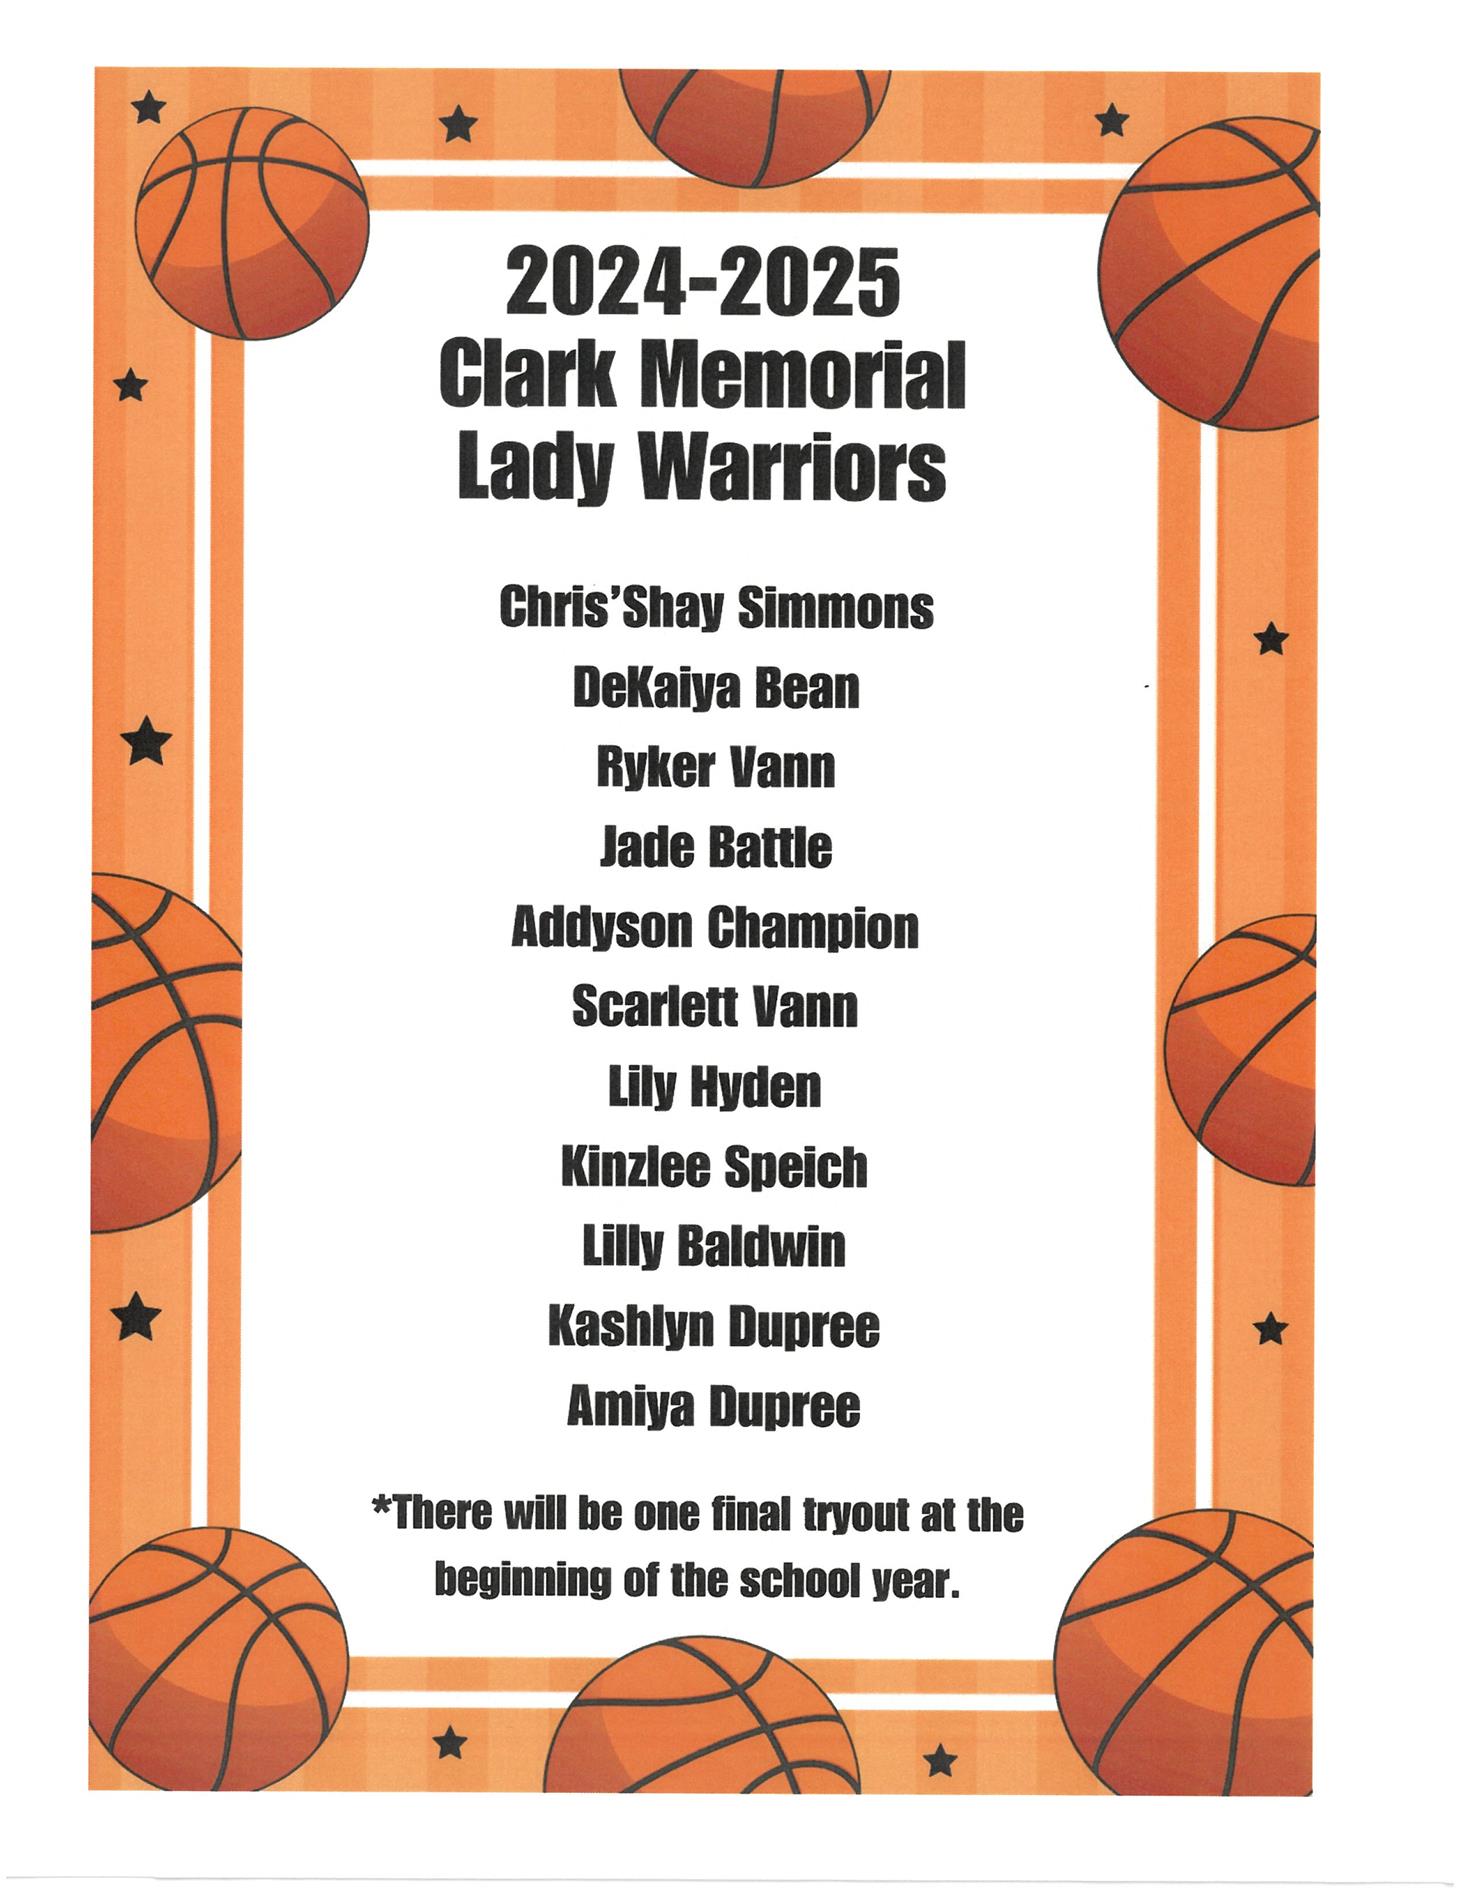 Lady Warriors Basketball 2024-2025 - Chris-Say Simmons, DeKaiya Bean, Ryker Vann, Jade Battle, Addyson Champion, Scarlett Vann, Lily Hyden, Kinzlee Speich, Lilly Baldwin, Kashlynn Dupree, Amiya Dupree. There will be a final tryout  at the beginning of the school year.